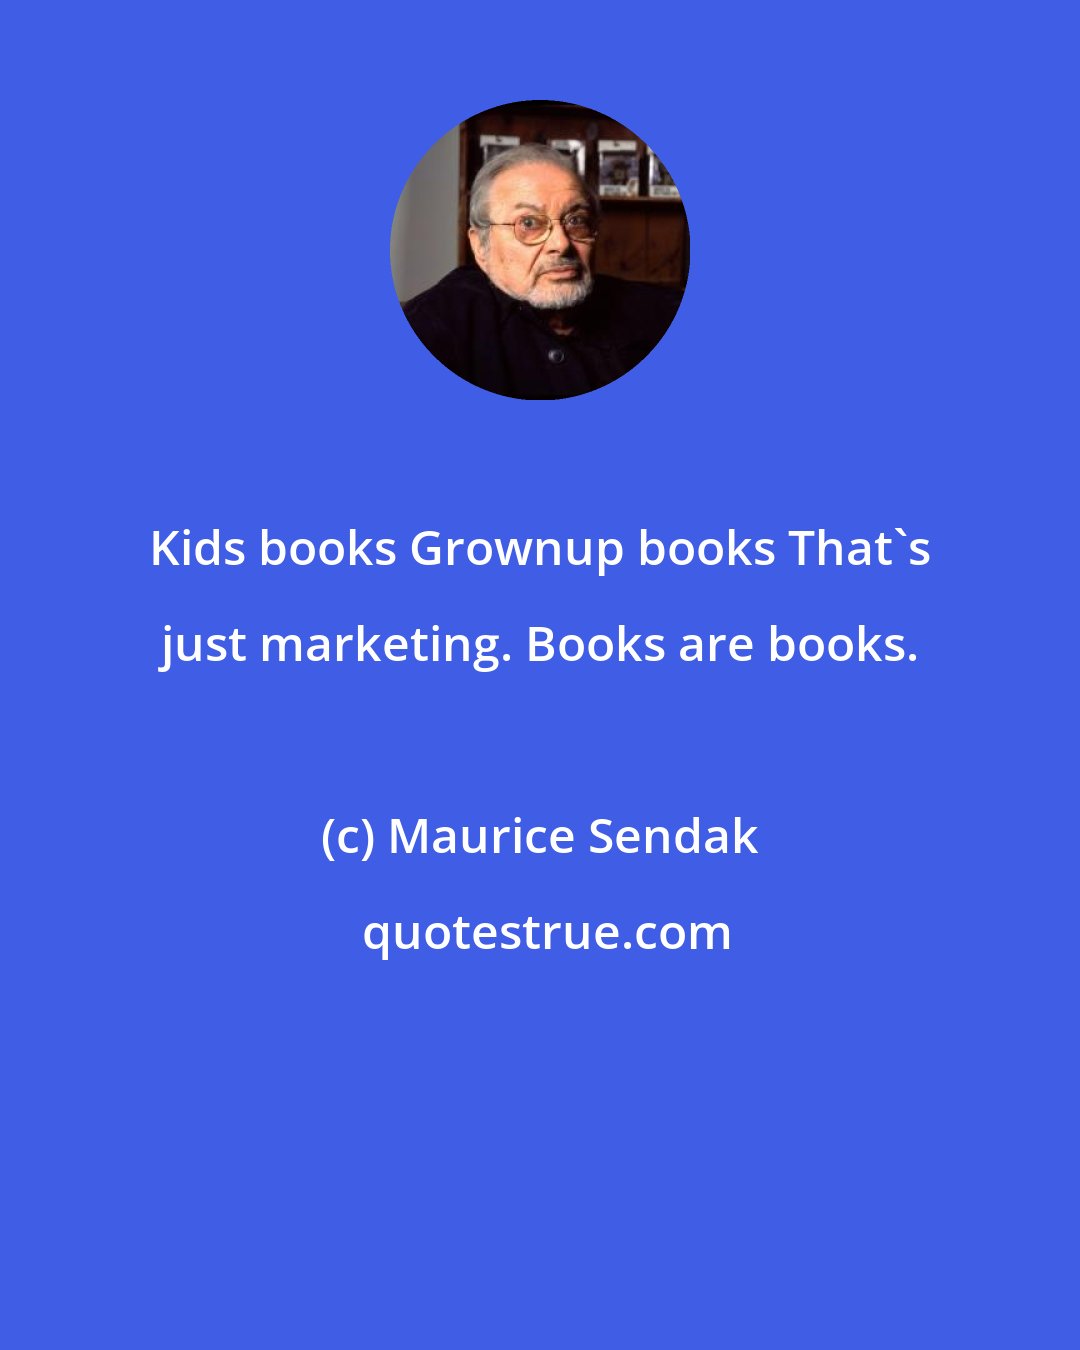 Maurice Sendak: Kids books Grownup books That's just marketing. Books are books.